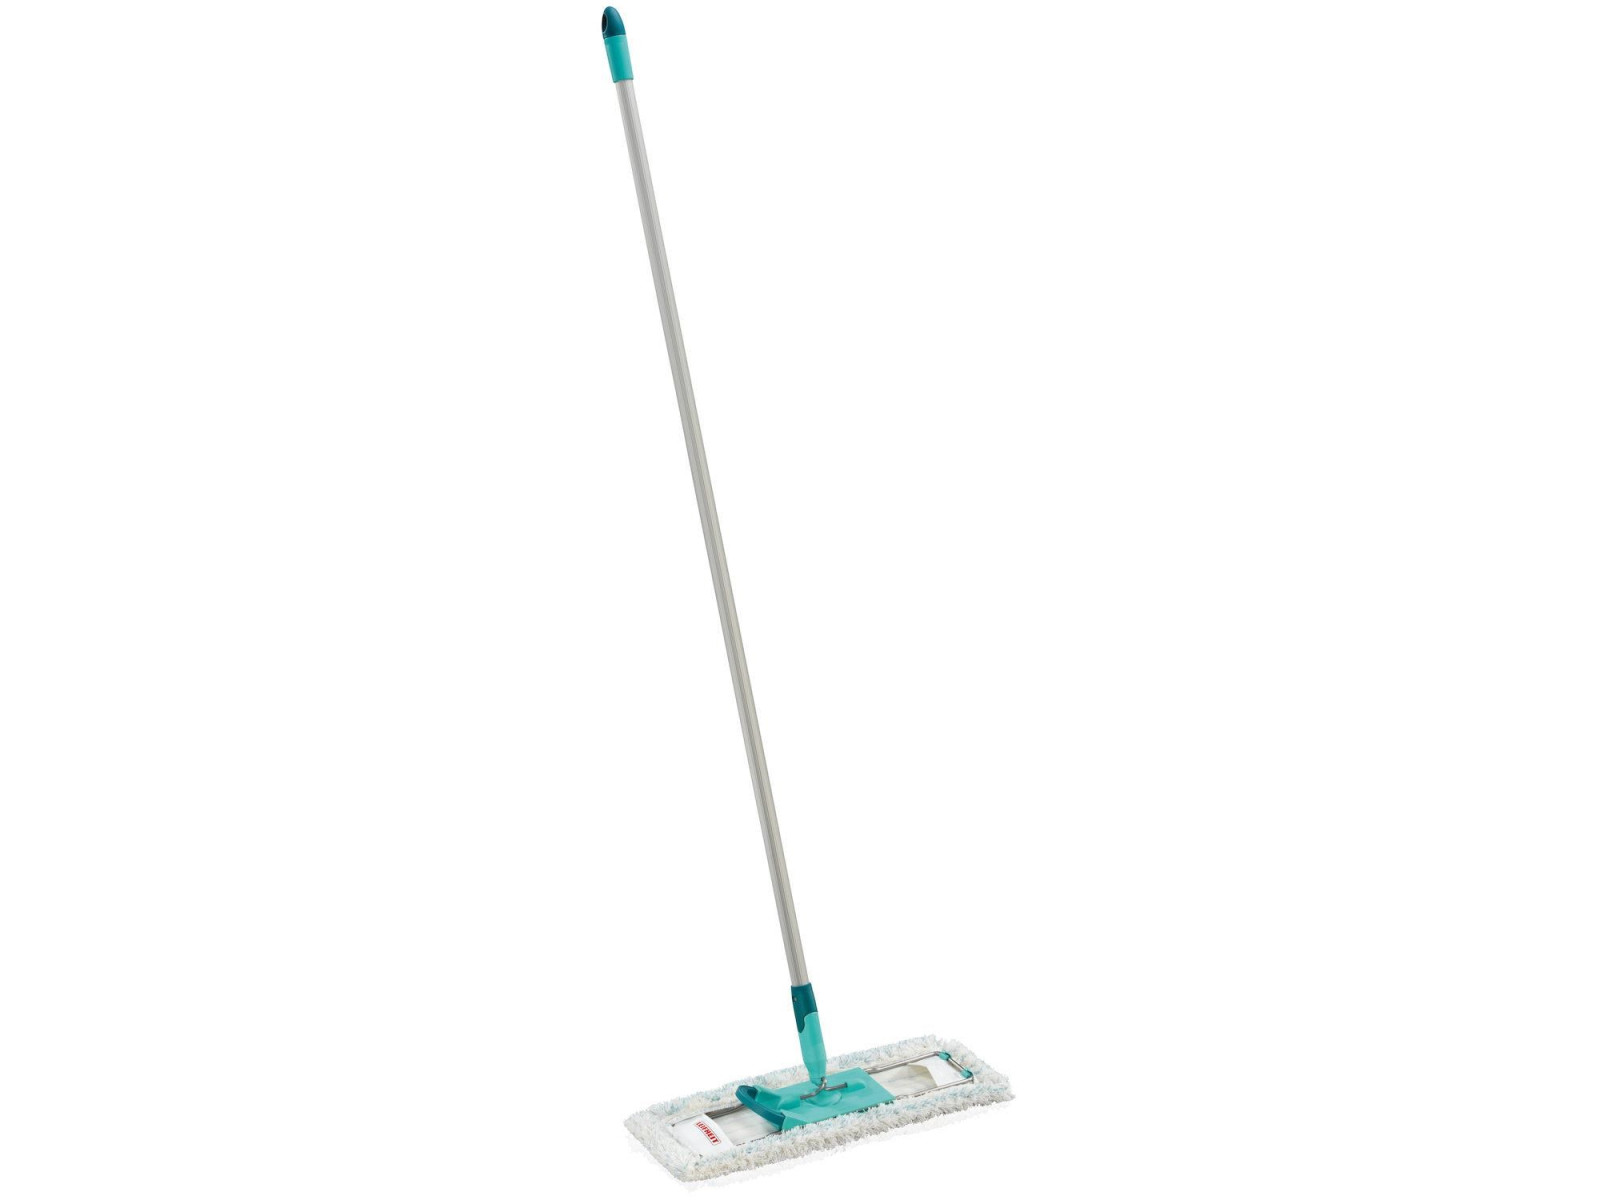 Leifheit 55020 PROFI STRONG mop na podlahu